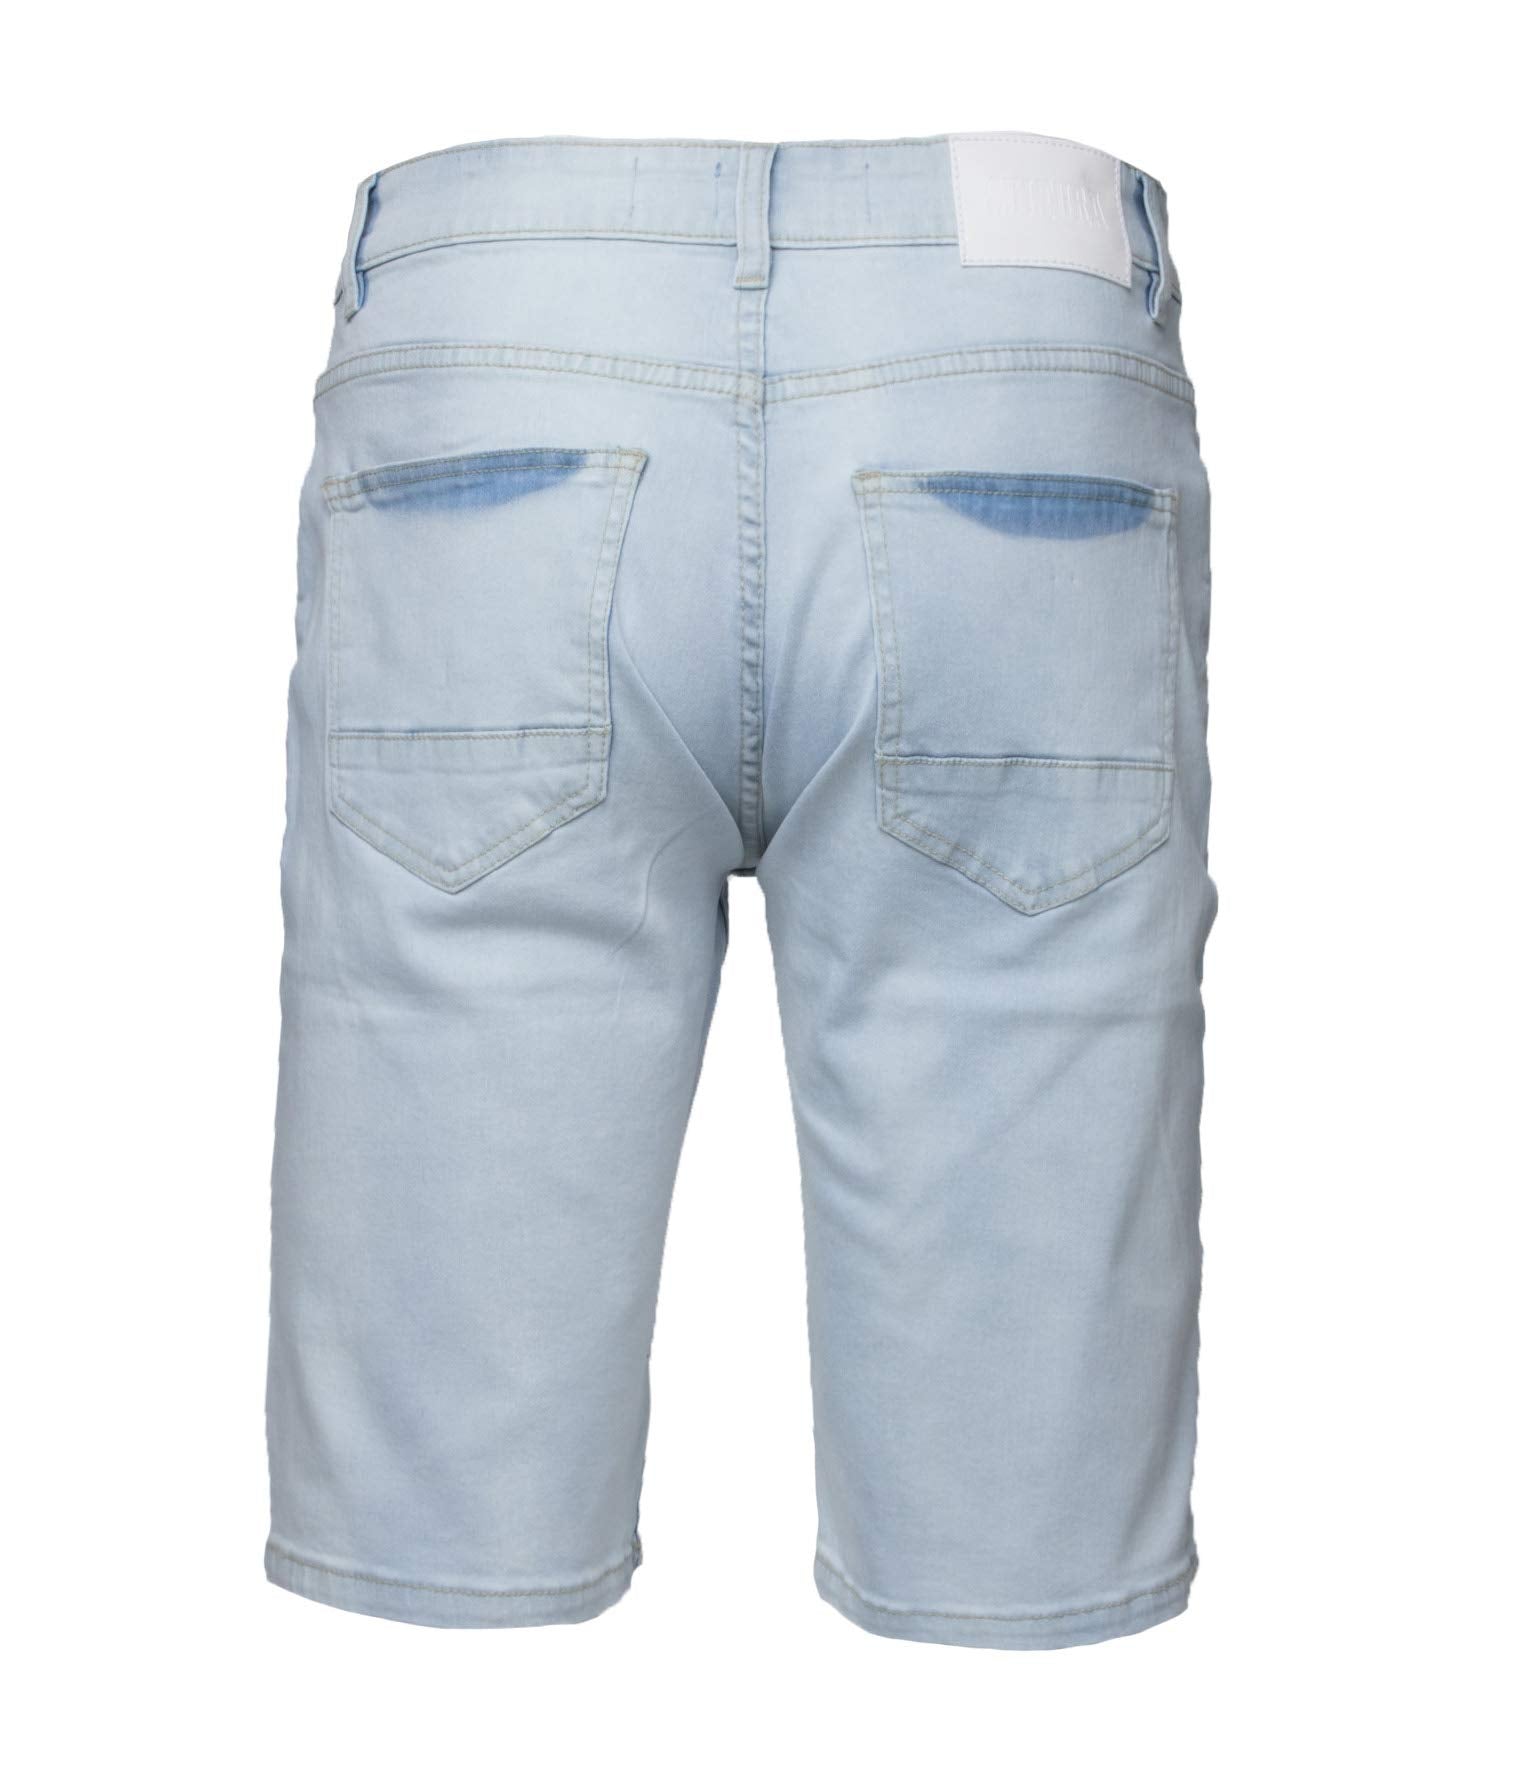 CMS-98327 | Men's Stretch Denim Shorts, Light Wash Blue - X-RAY JEANS